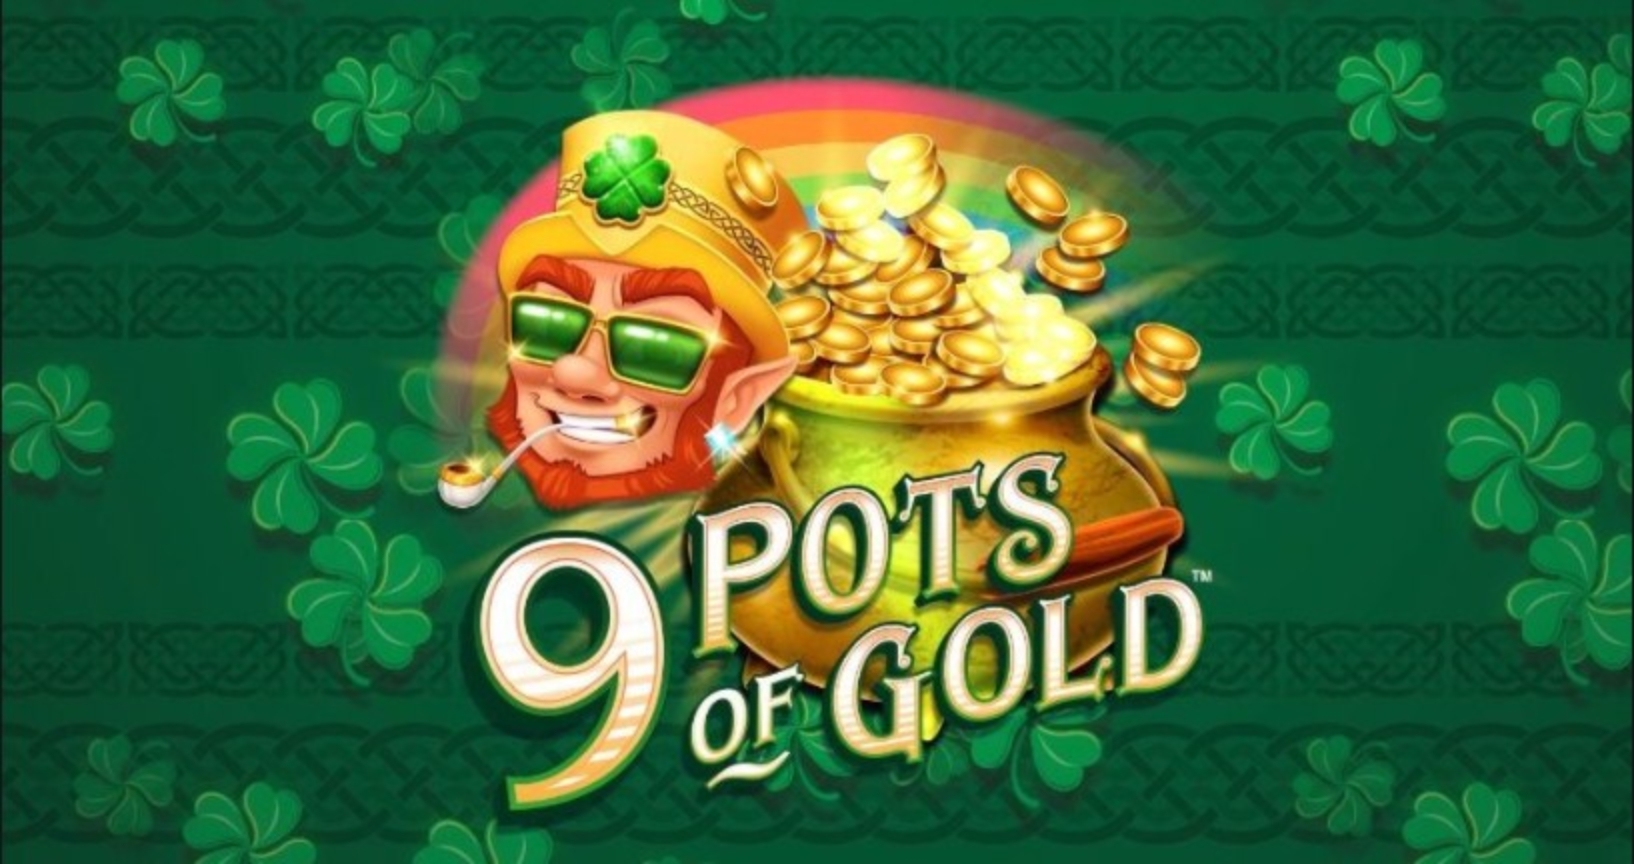 9 Pots of Gold demo